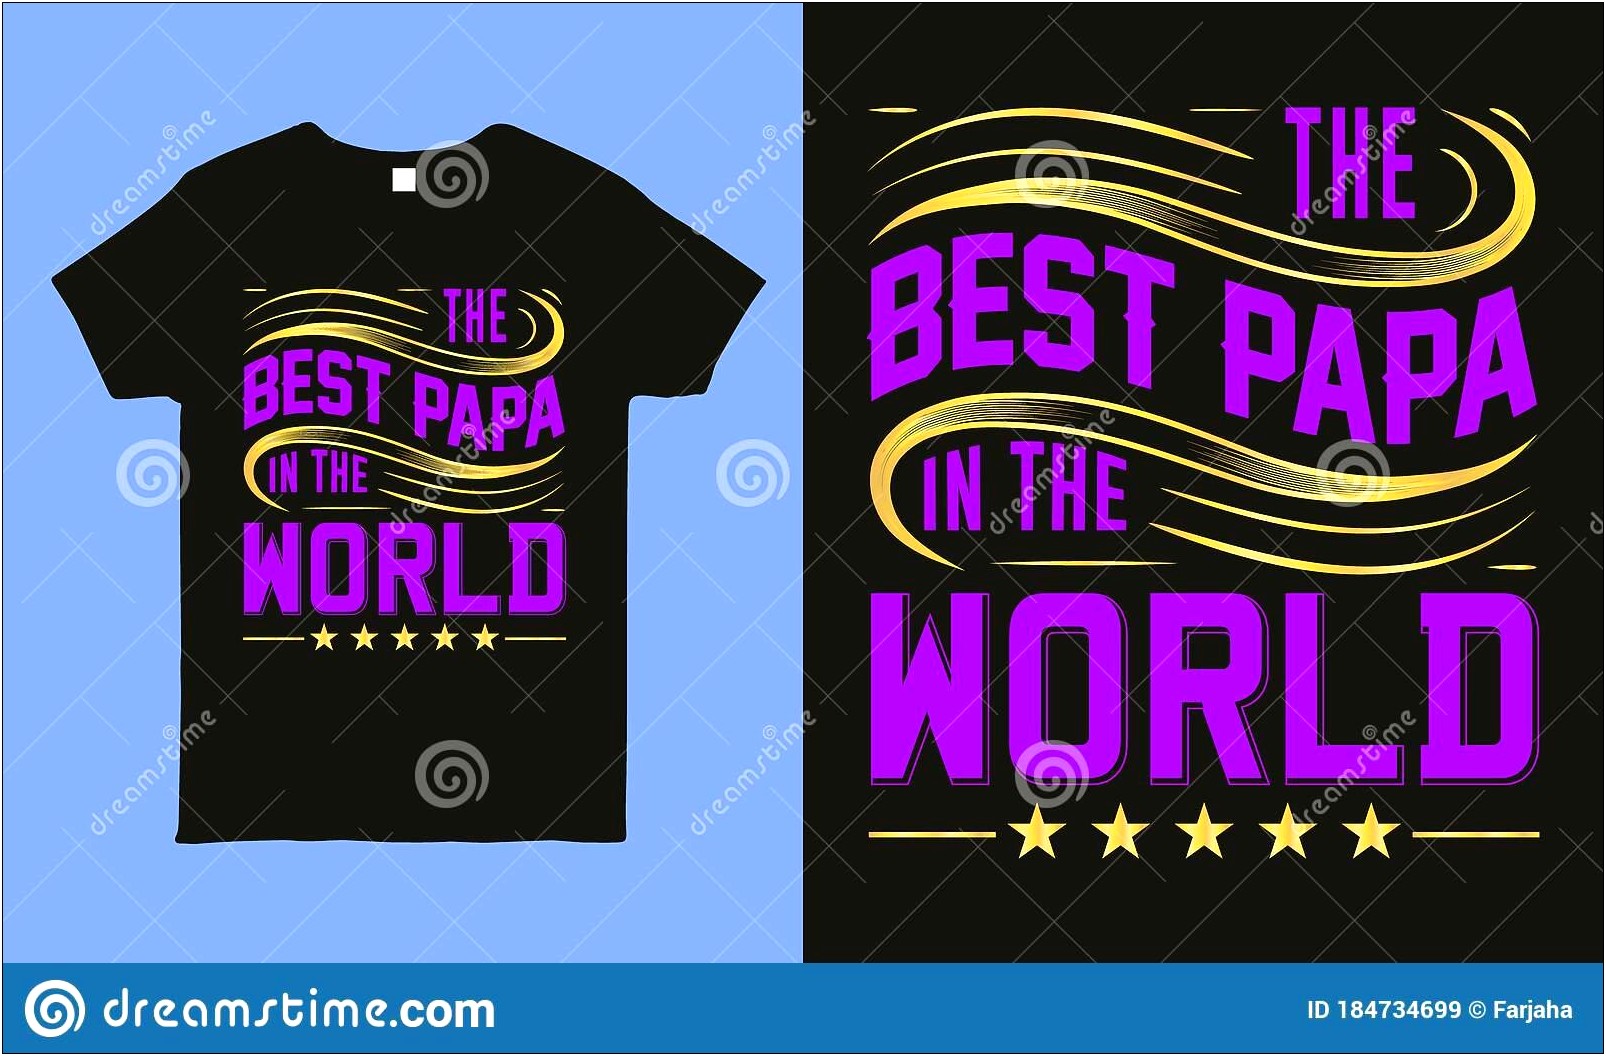 Free T Shirt Design Contest Flyer Template